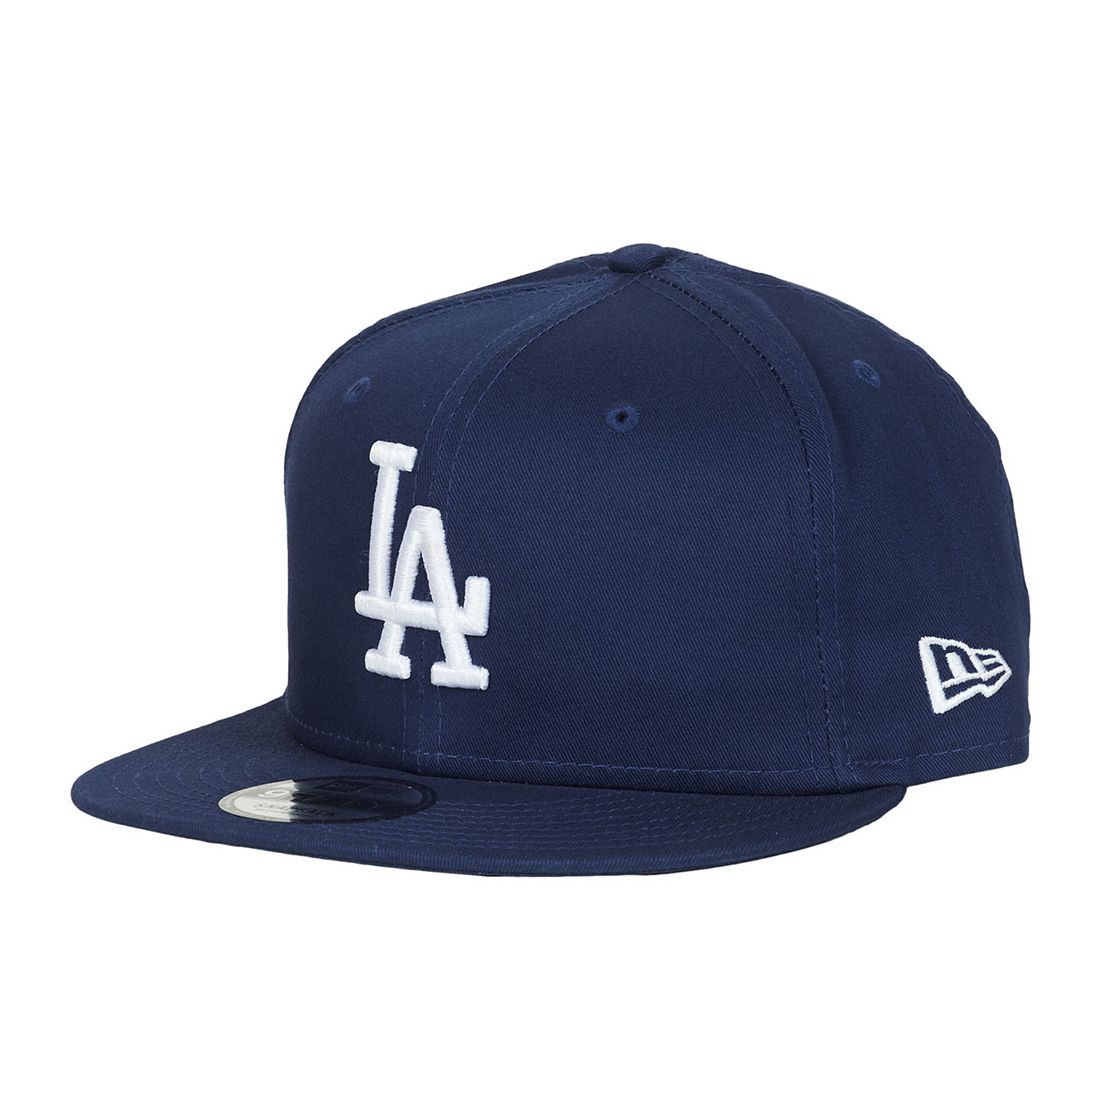 New Era Mlb L.A. Dodgers Navy/White Cap M/L